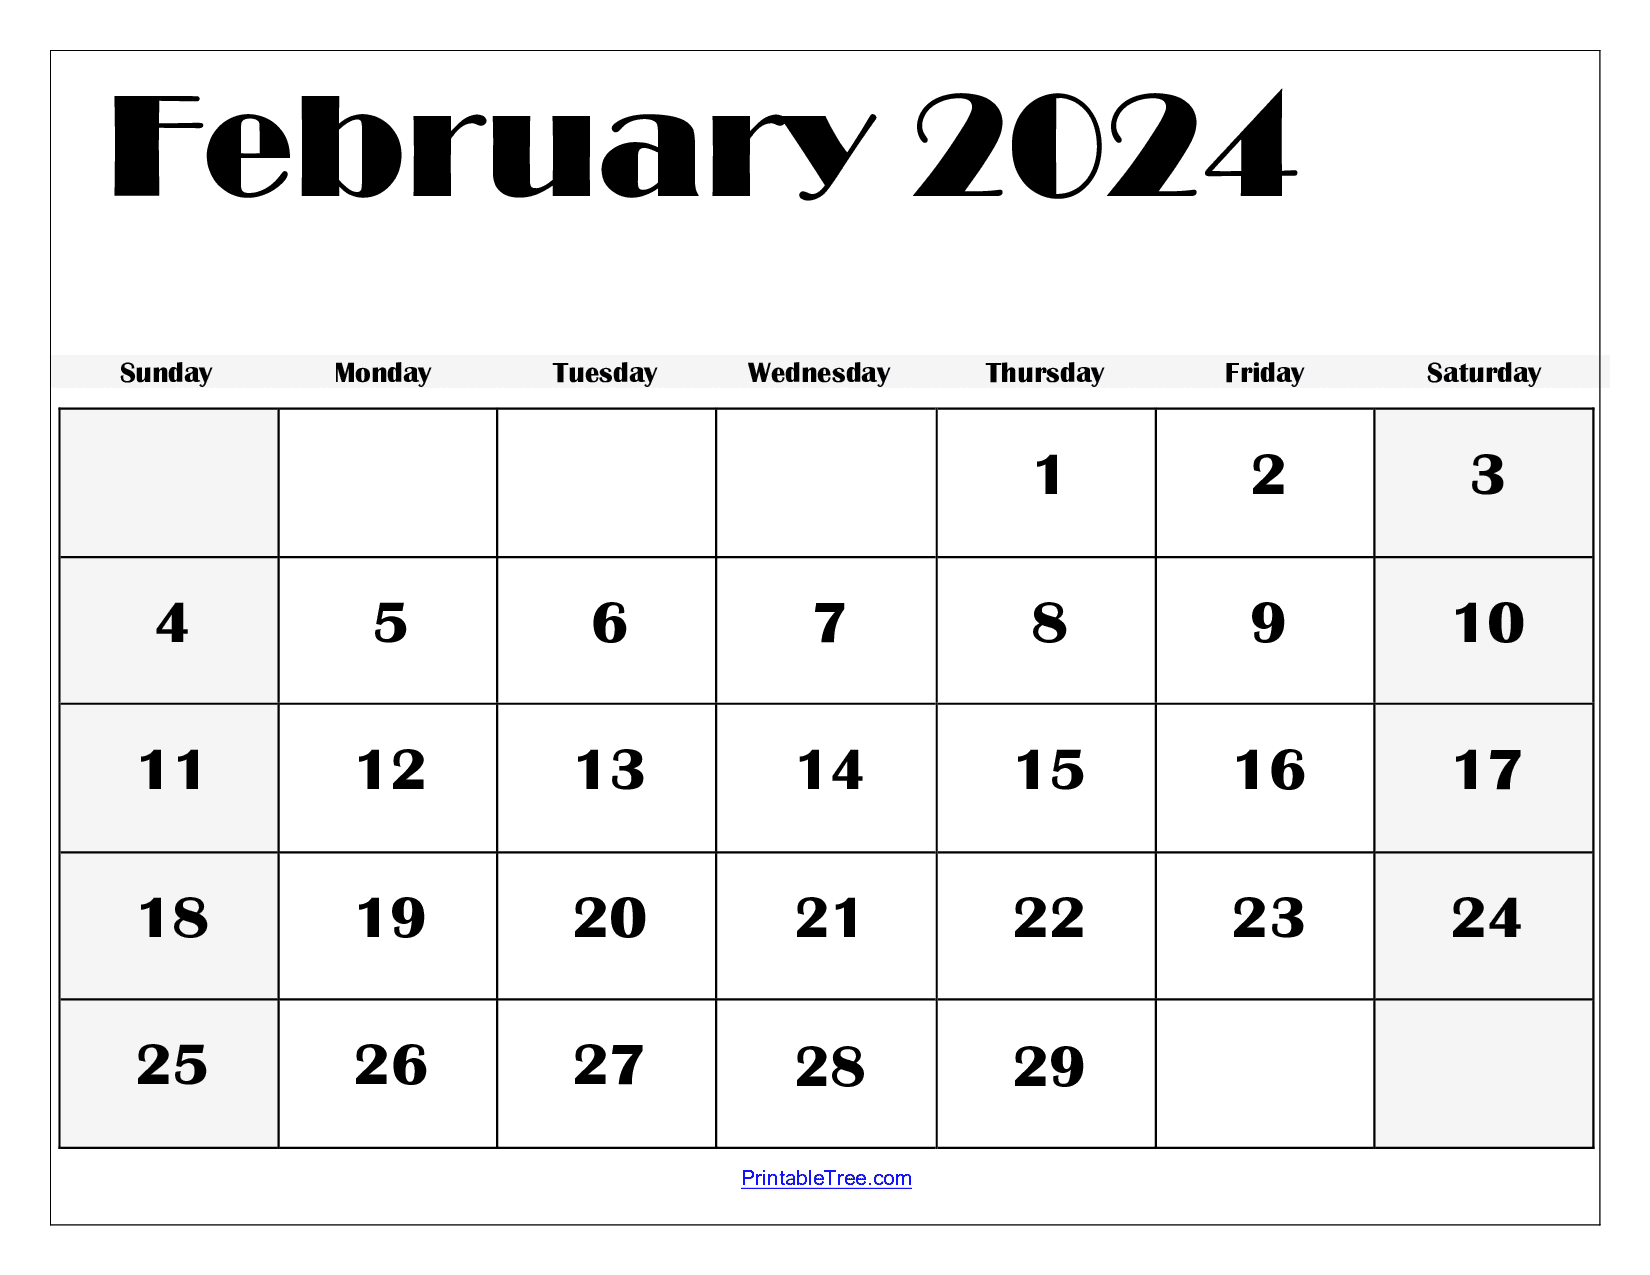 February 2024 Calendar Printable Pdf Template With Holidays for February Free Printable Calendar 2024